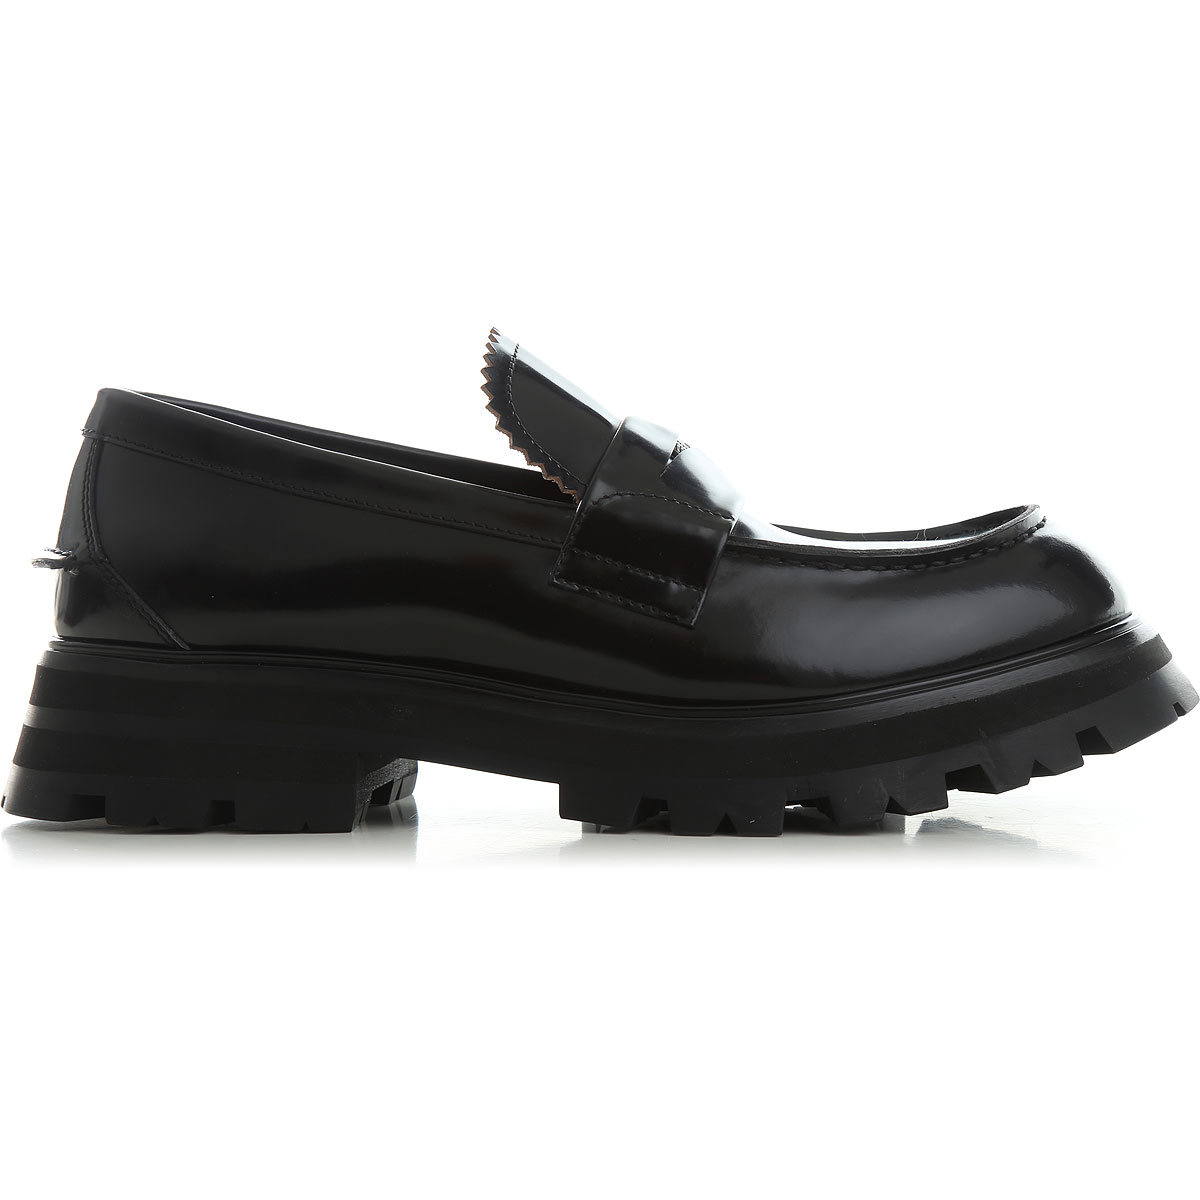 Mens Shoes Alexander McQueen, Style code: 683571-whz85-1081